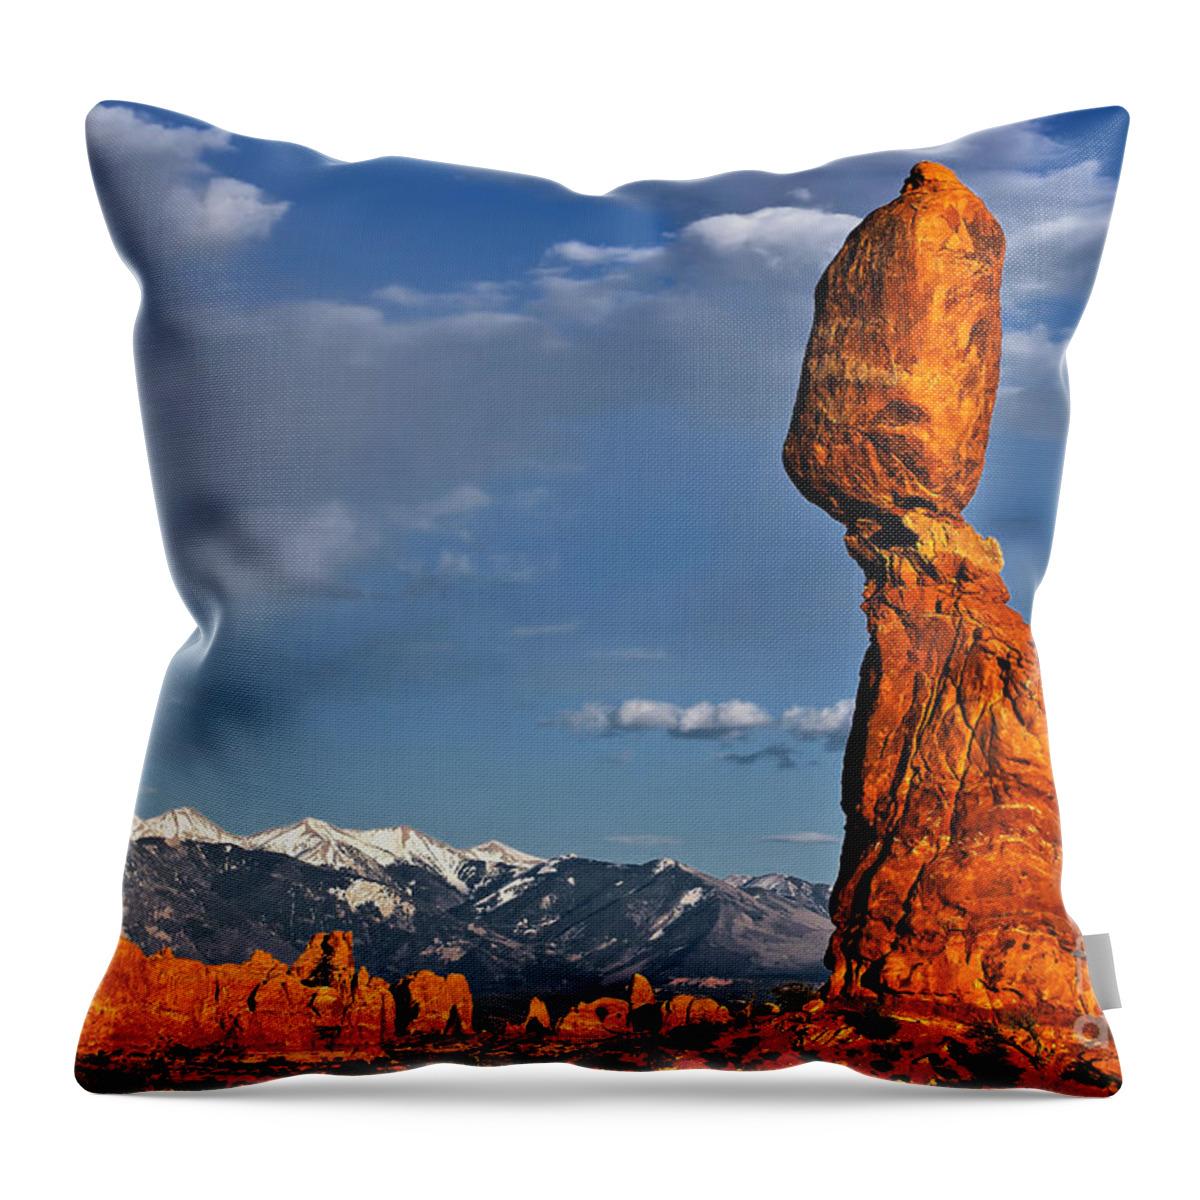 Utah Throw Pillow featuring the photograph Gravity Defying Balanced Rock, Arches National Park, Utah by Sam Antonio